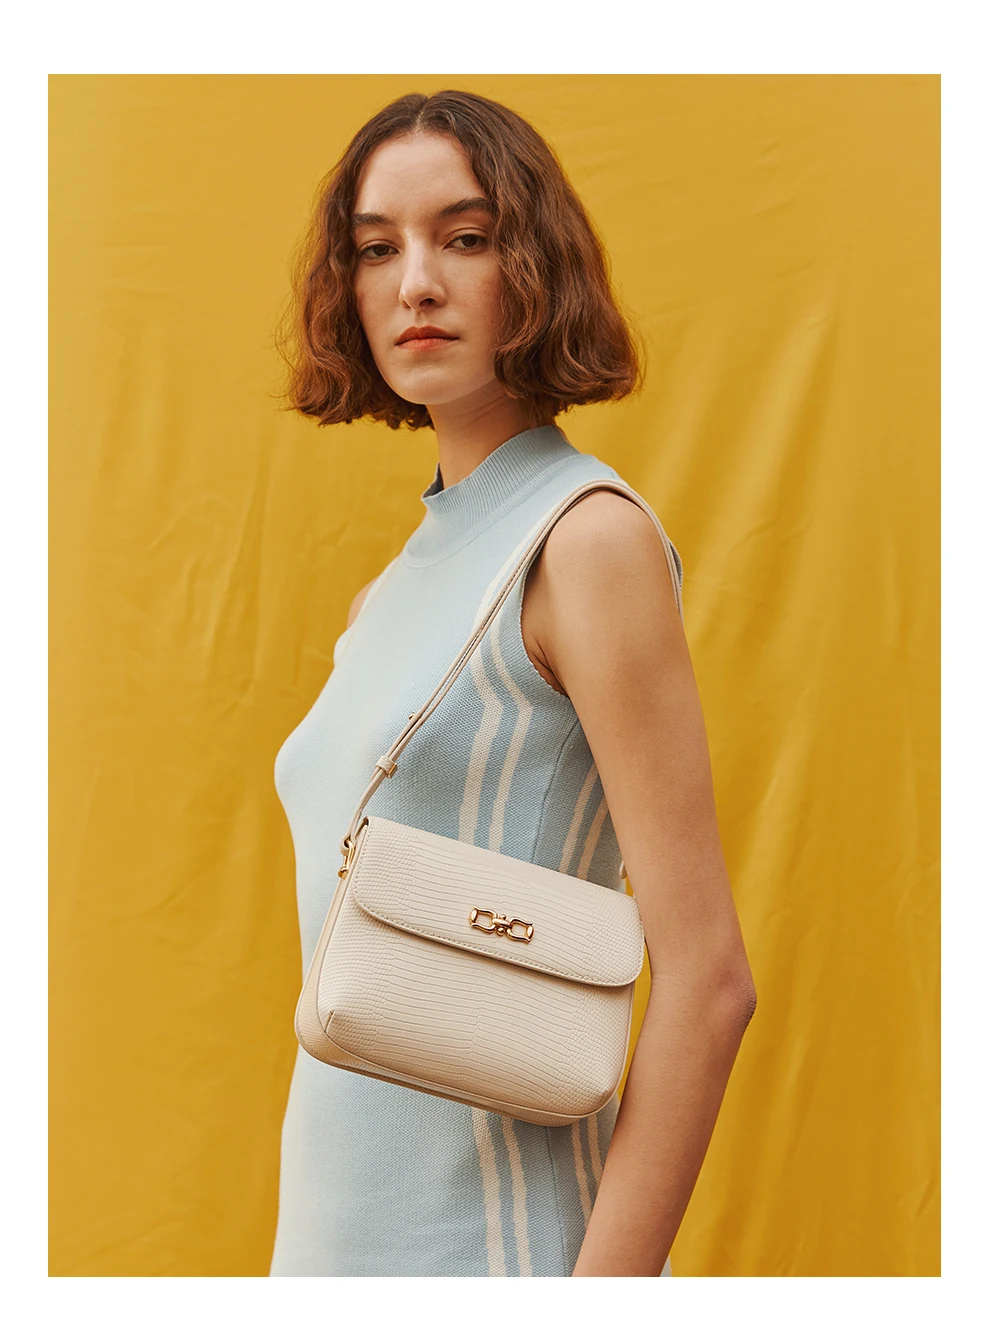 LAFESTIN luxury designer crossbody bag Alina